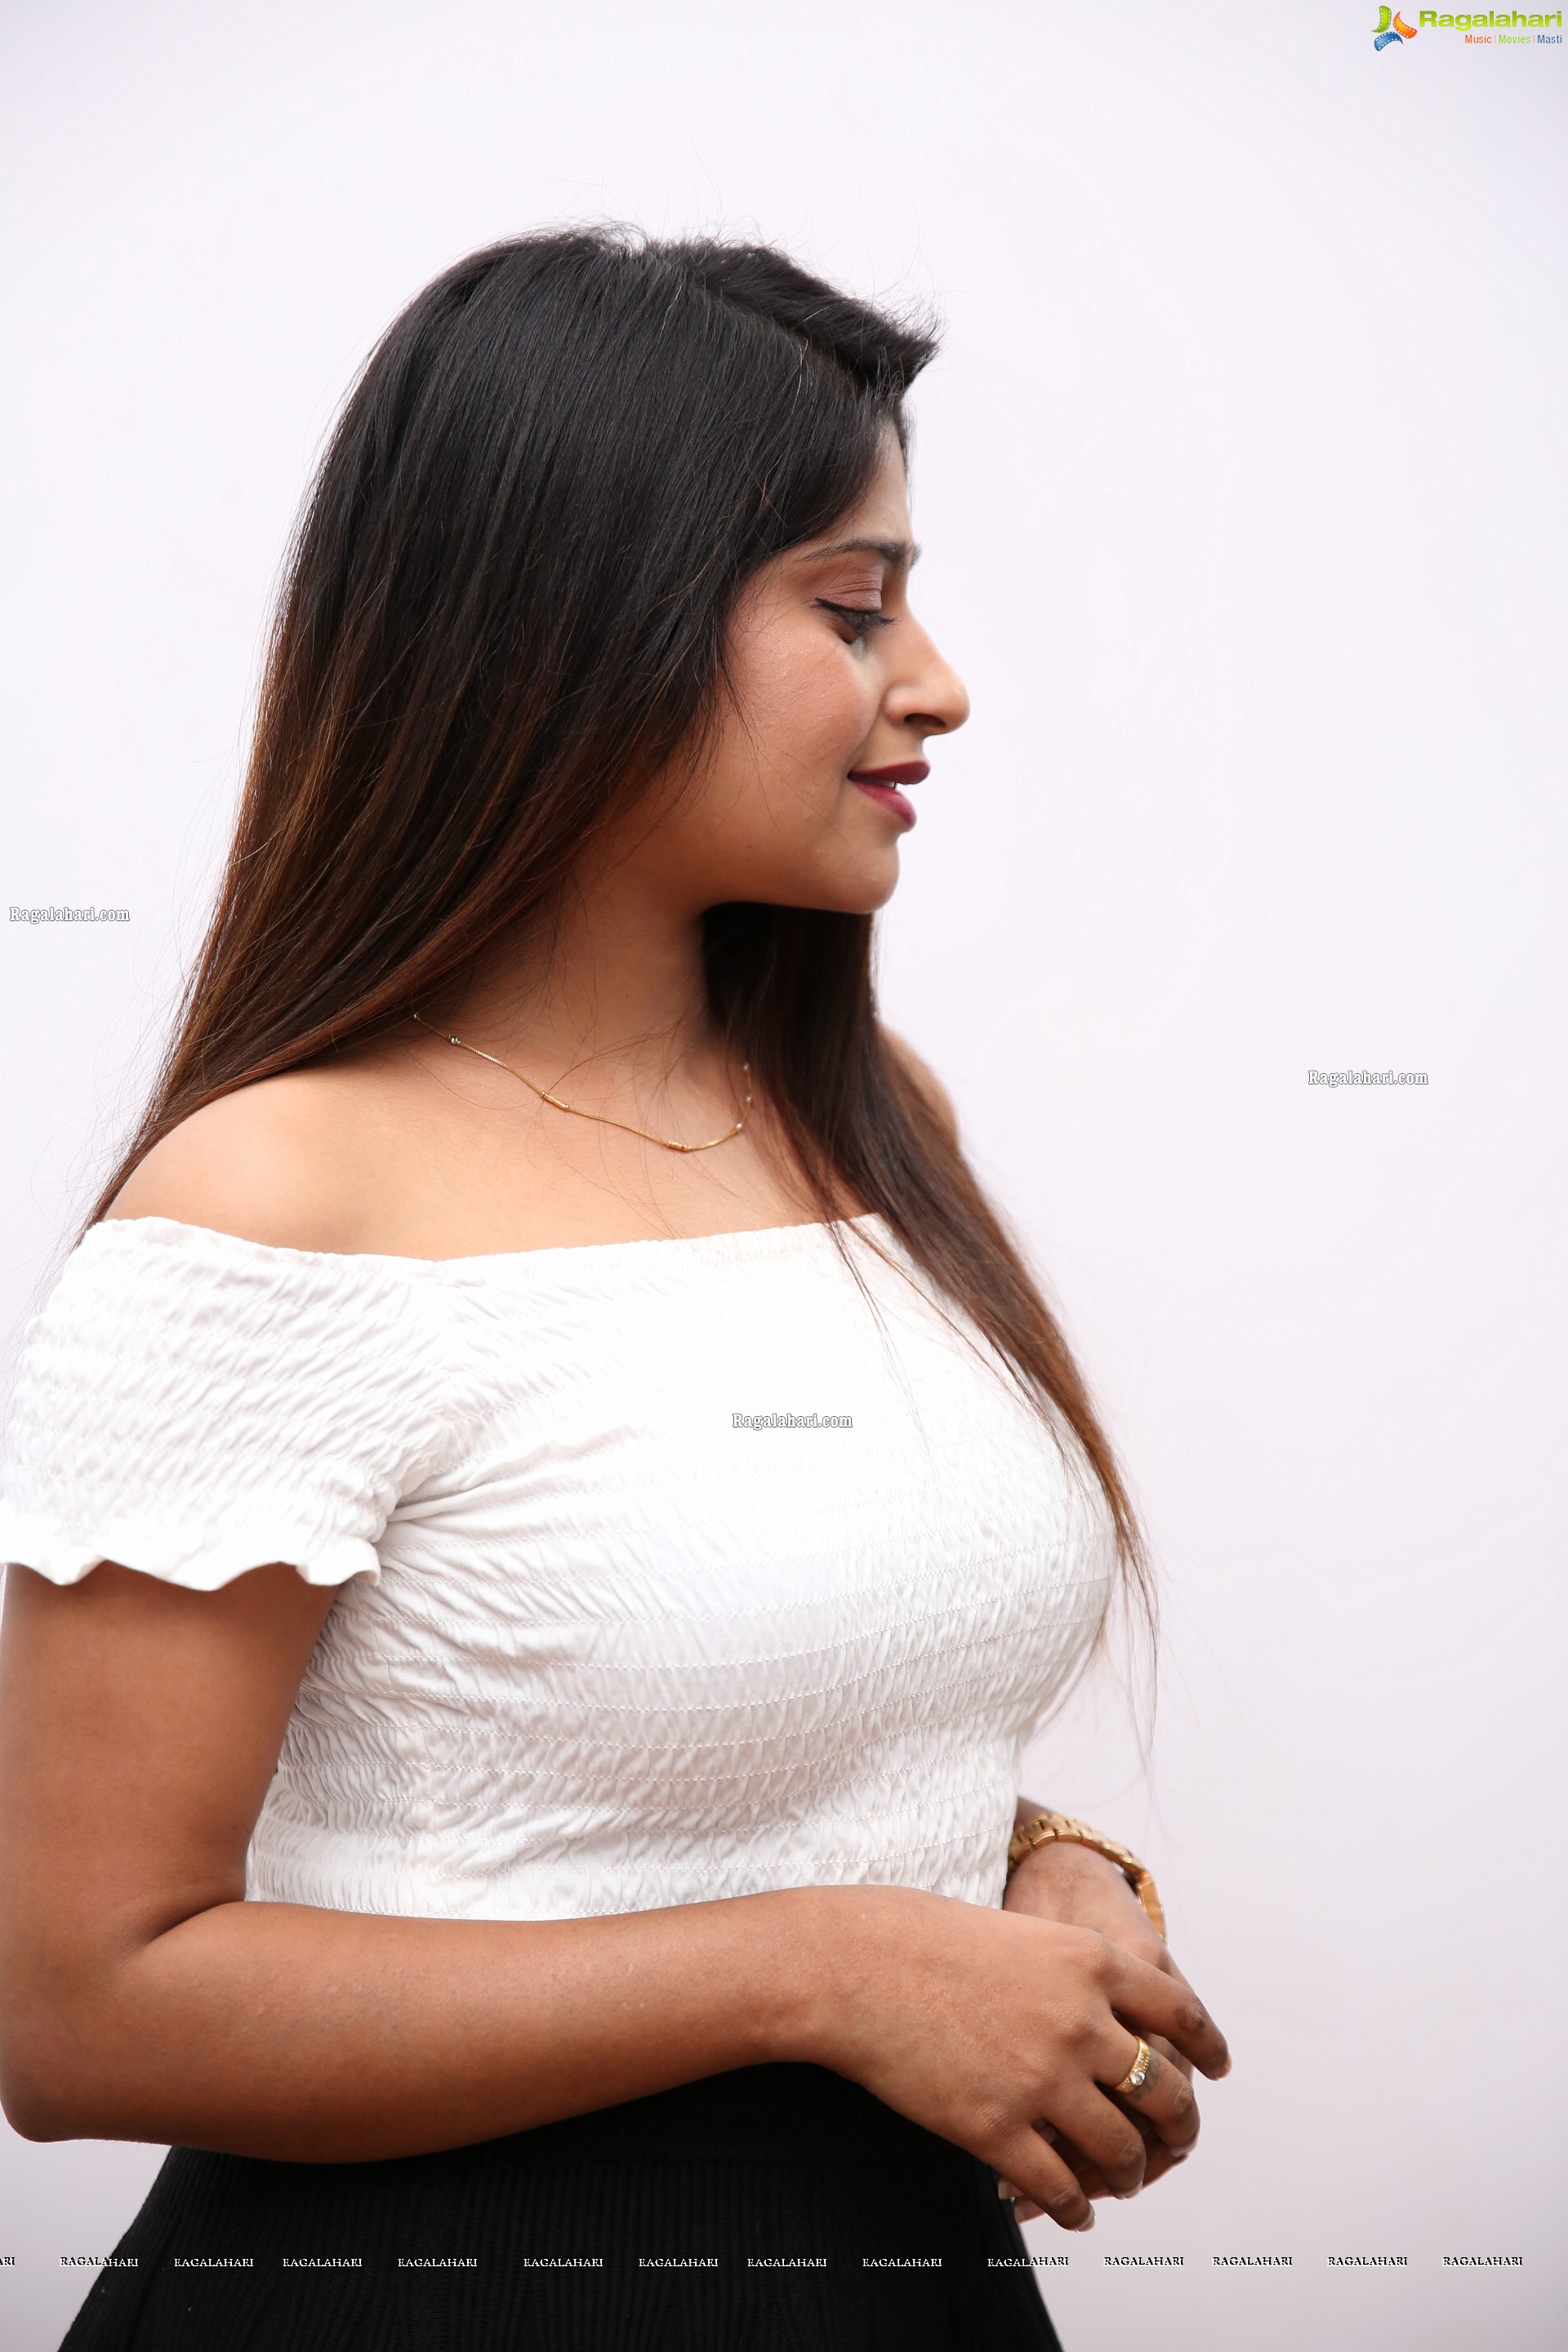 Shravani Varma at Sutraa Fashion Exhibition Curtain Raiser, HD Photo Gallery